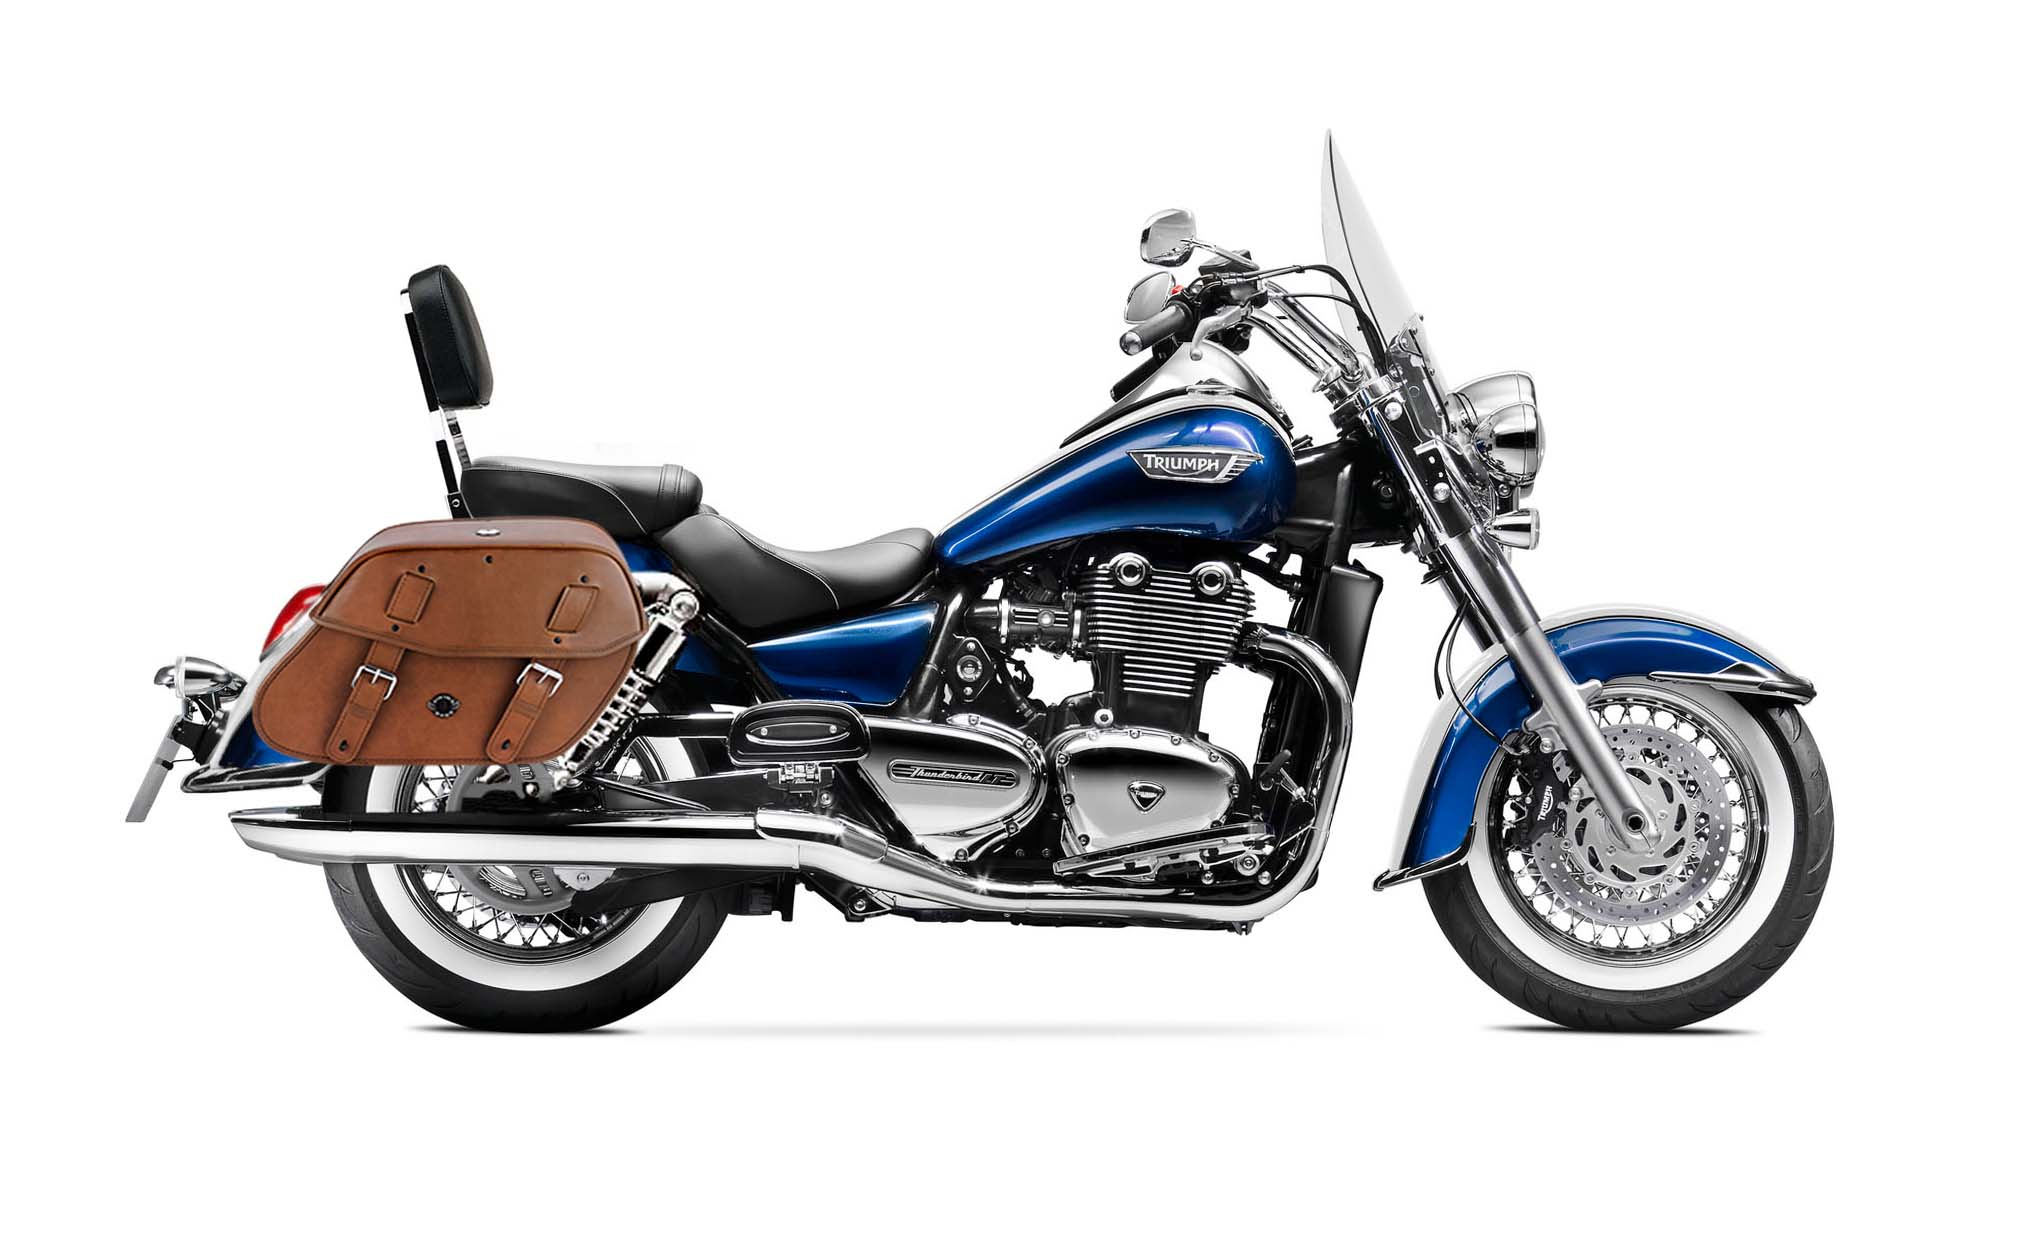 Viking Odin Brown Large Triumph Thunderbird Lt Leather Motorcycle Saddlebags on Bike Photo @expand